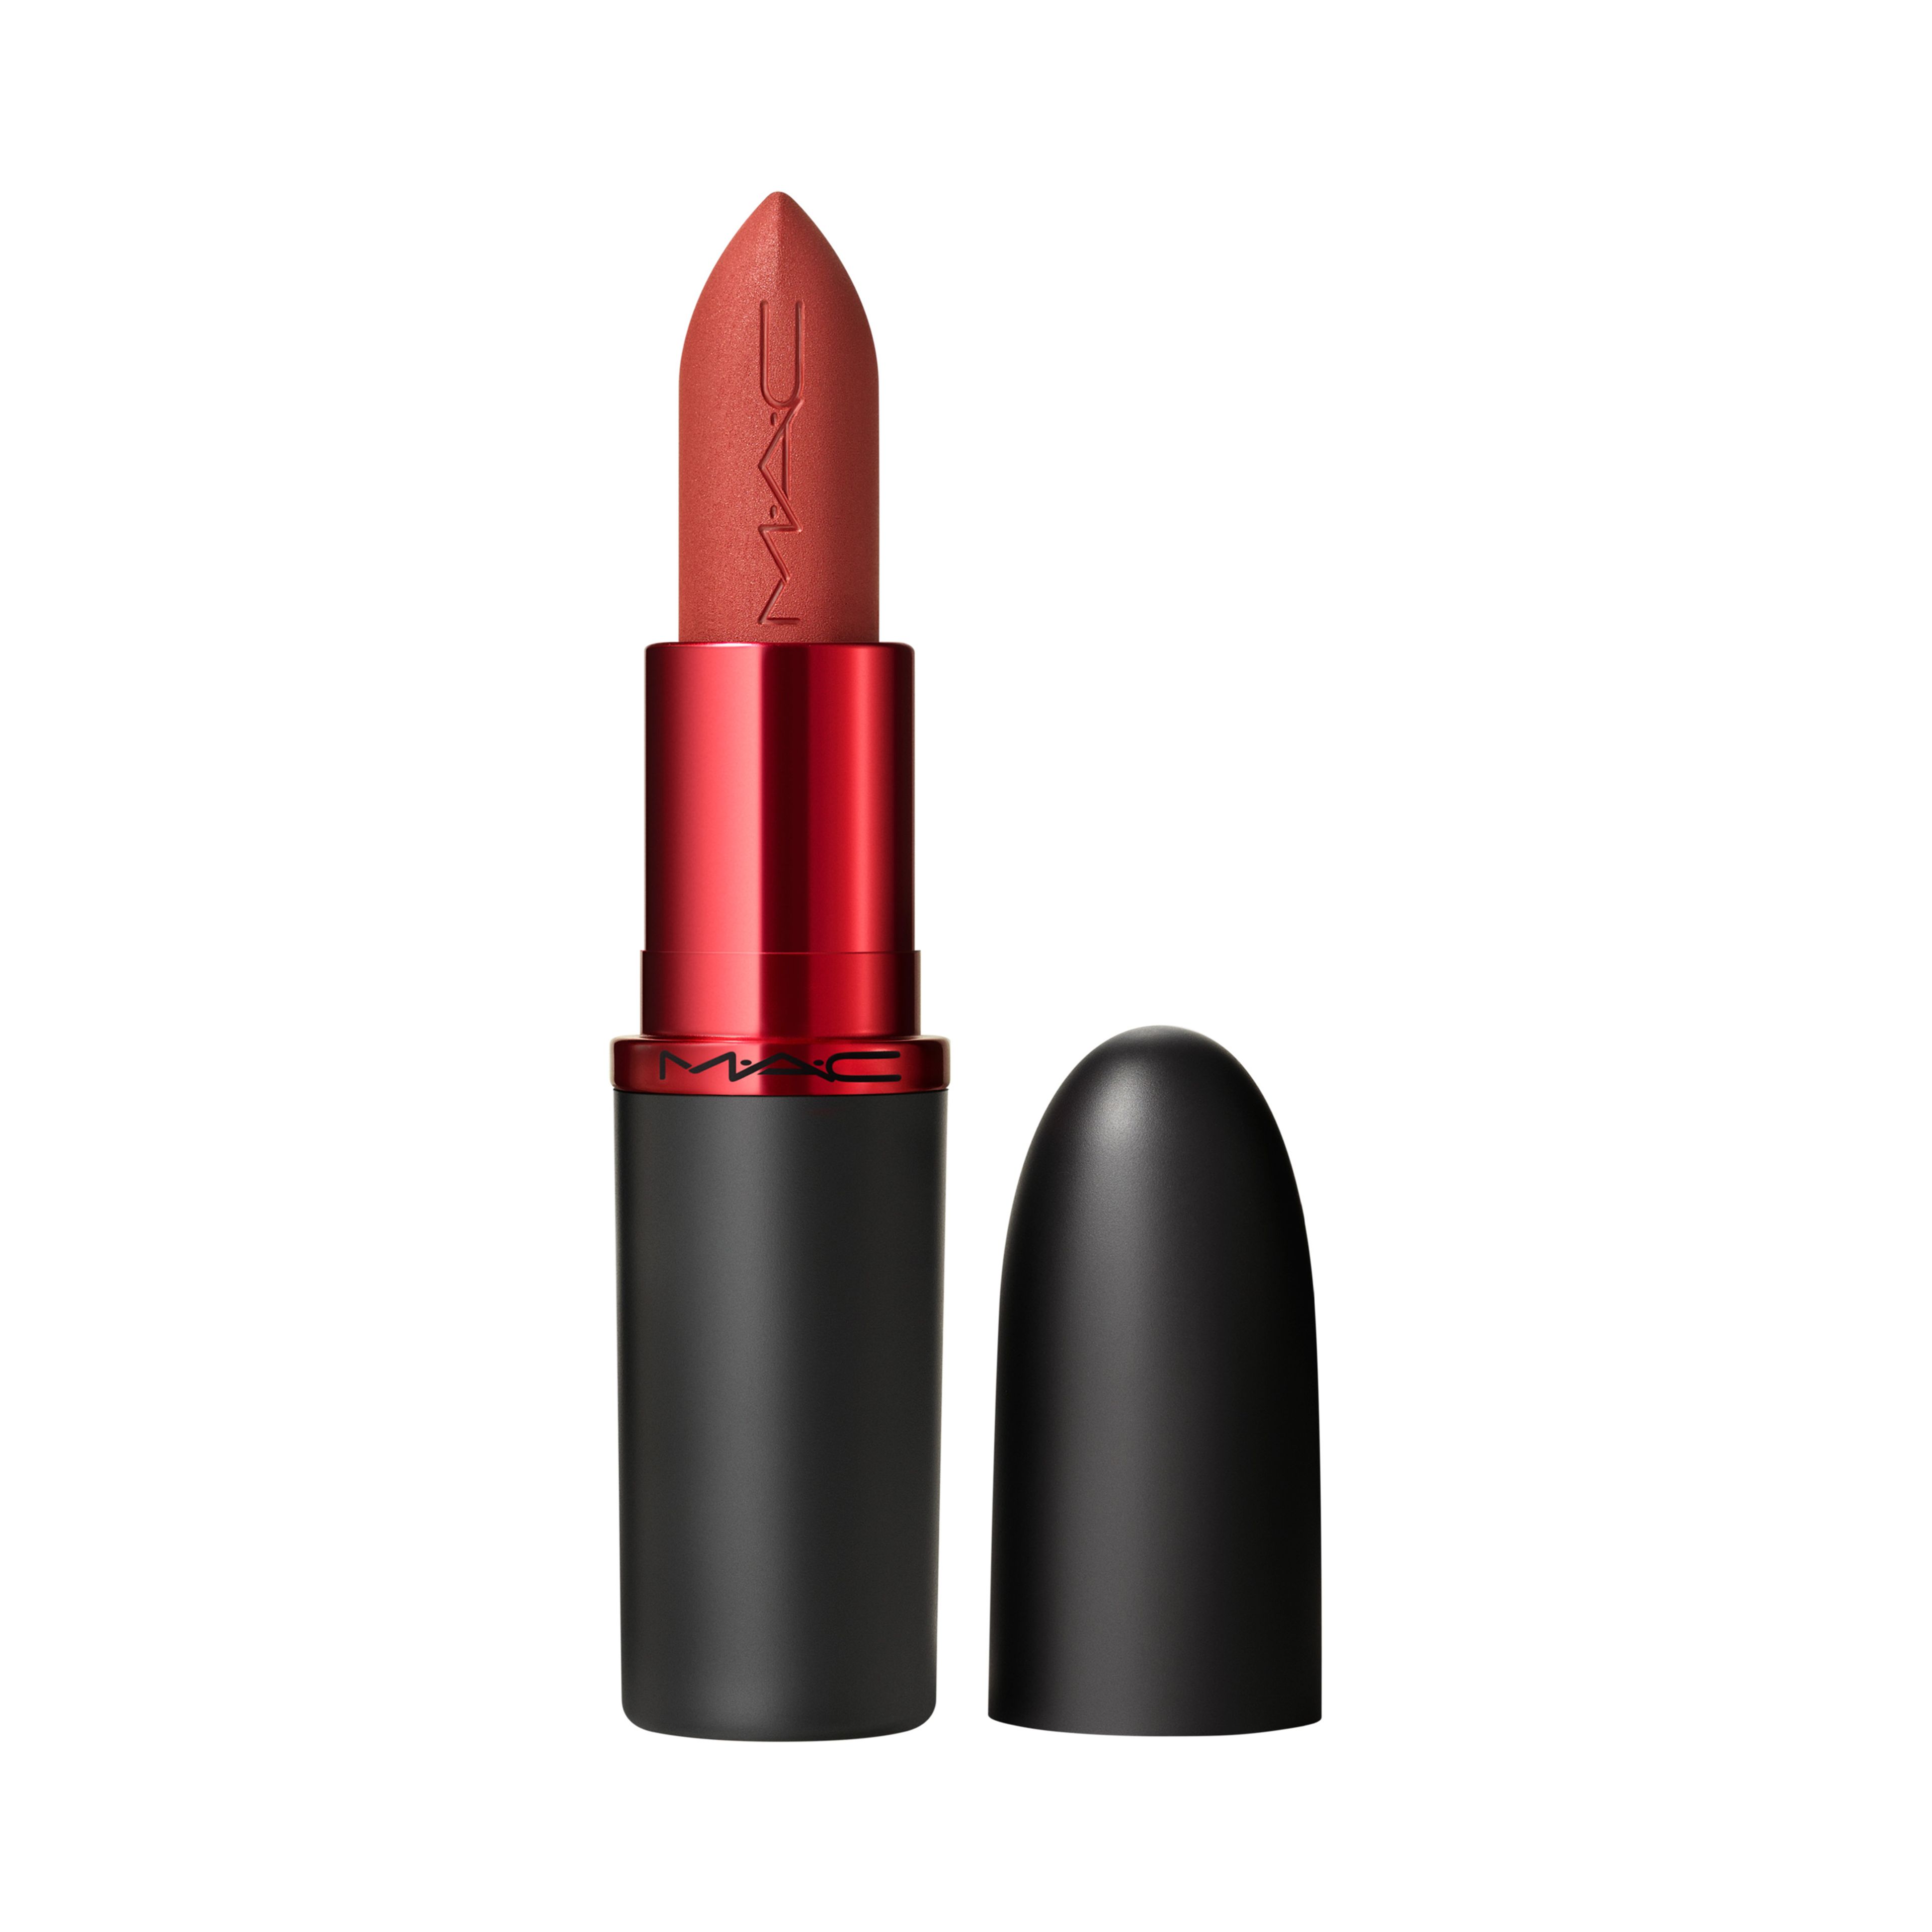 MAC Macximal
silky Matte
lipstick Viva
glam 1